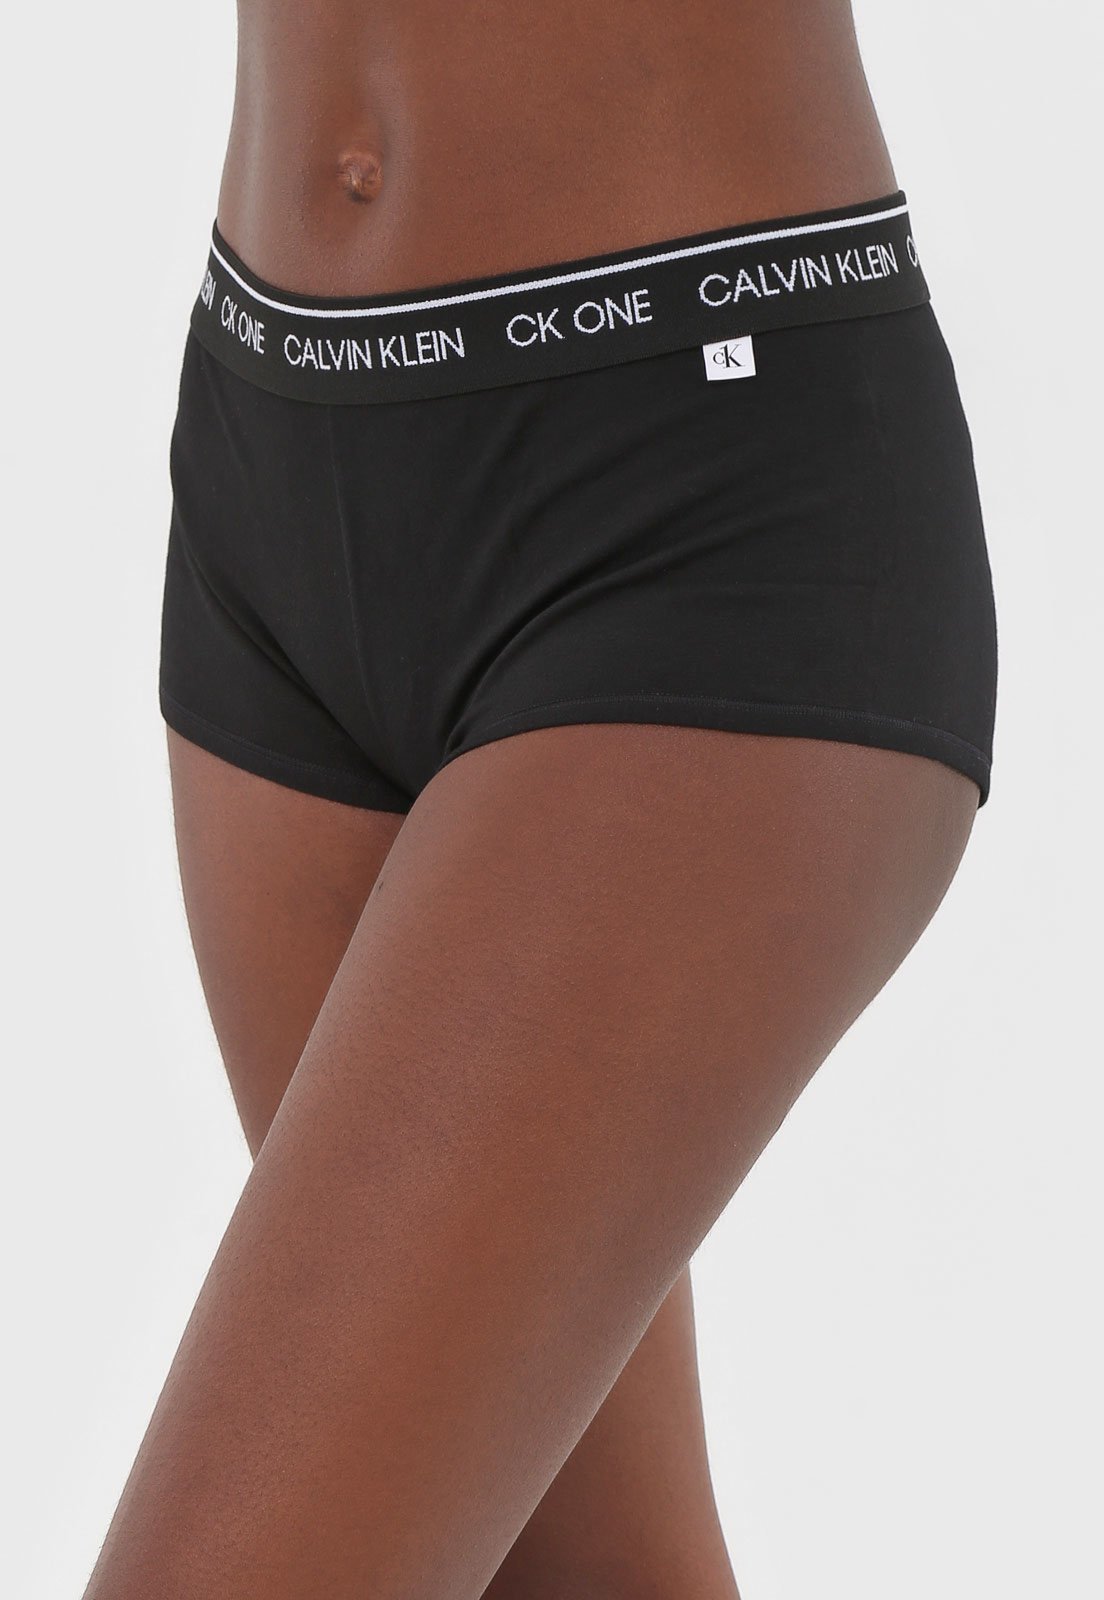 Calcinha Calvin Klein Underwear String Regulagem Preta - Compre